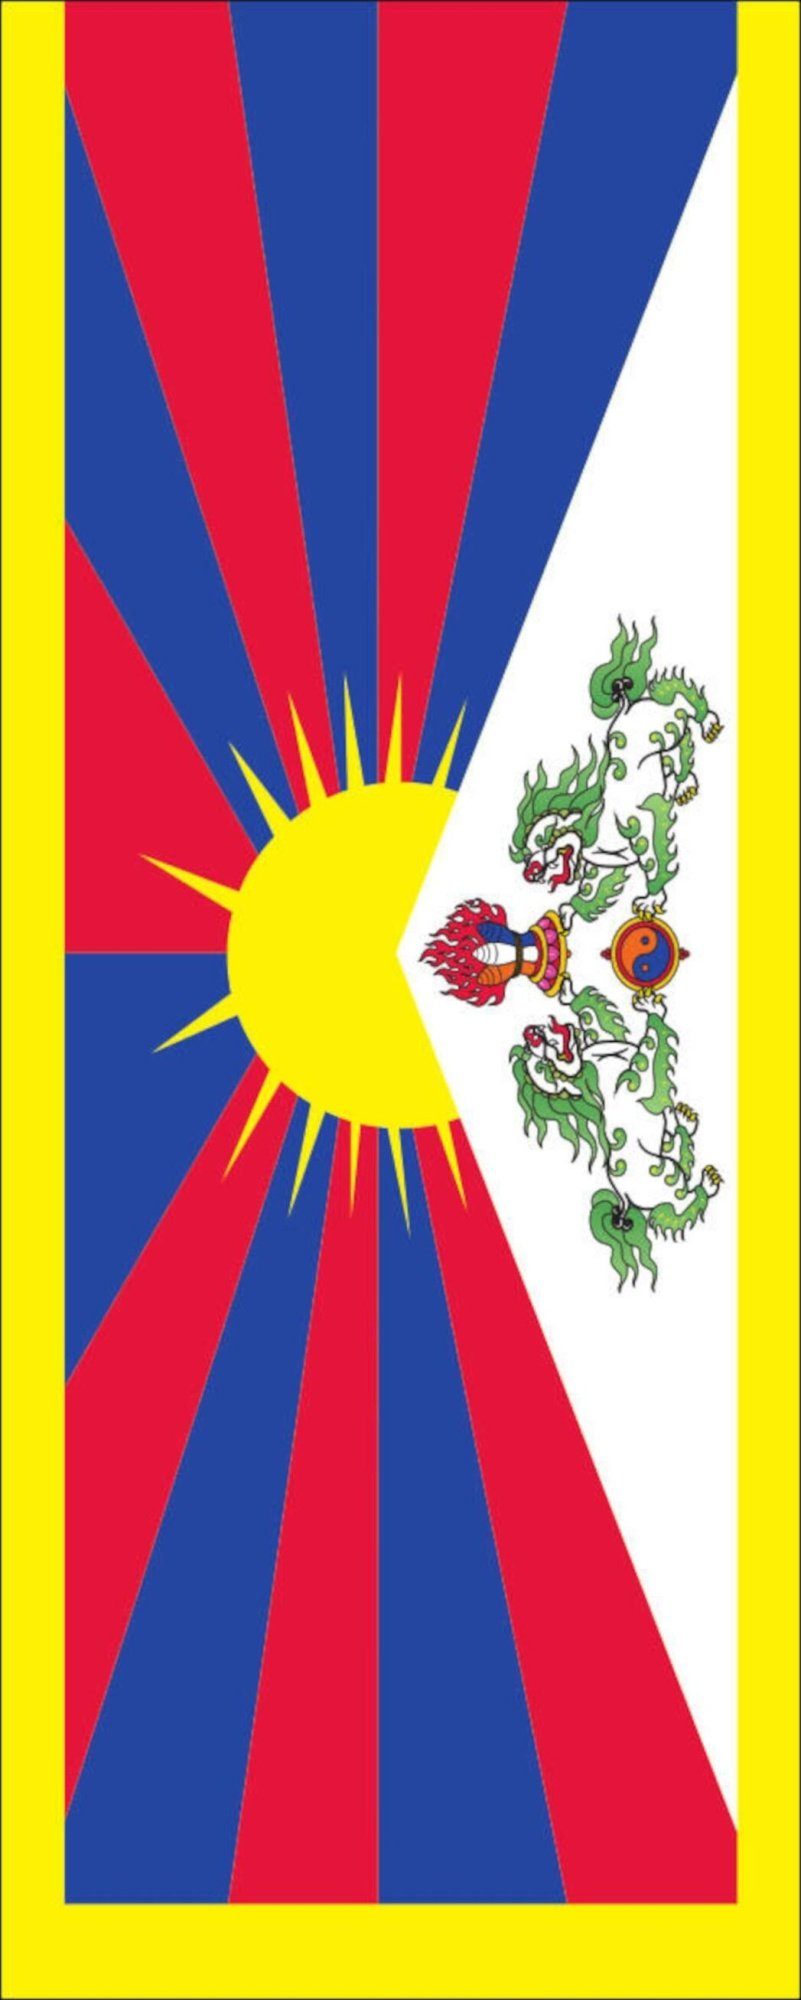 Tibet flaggenmeer g/m² Hochformat 110 Flagge Flagge